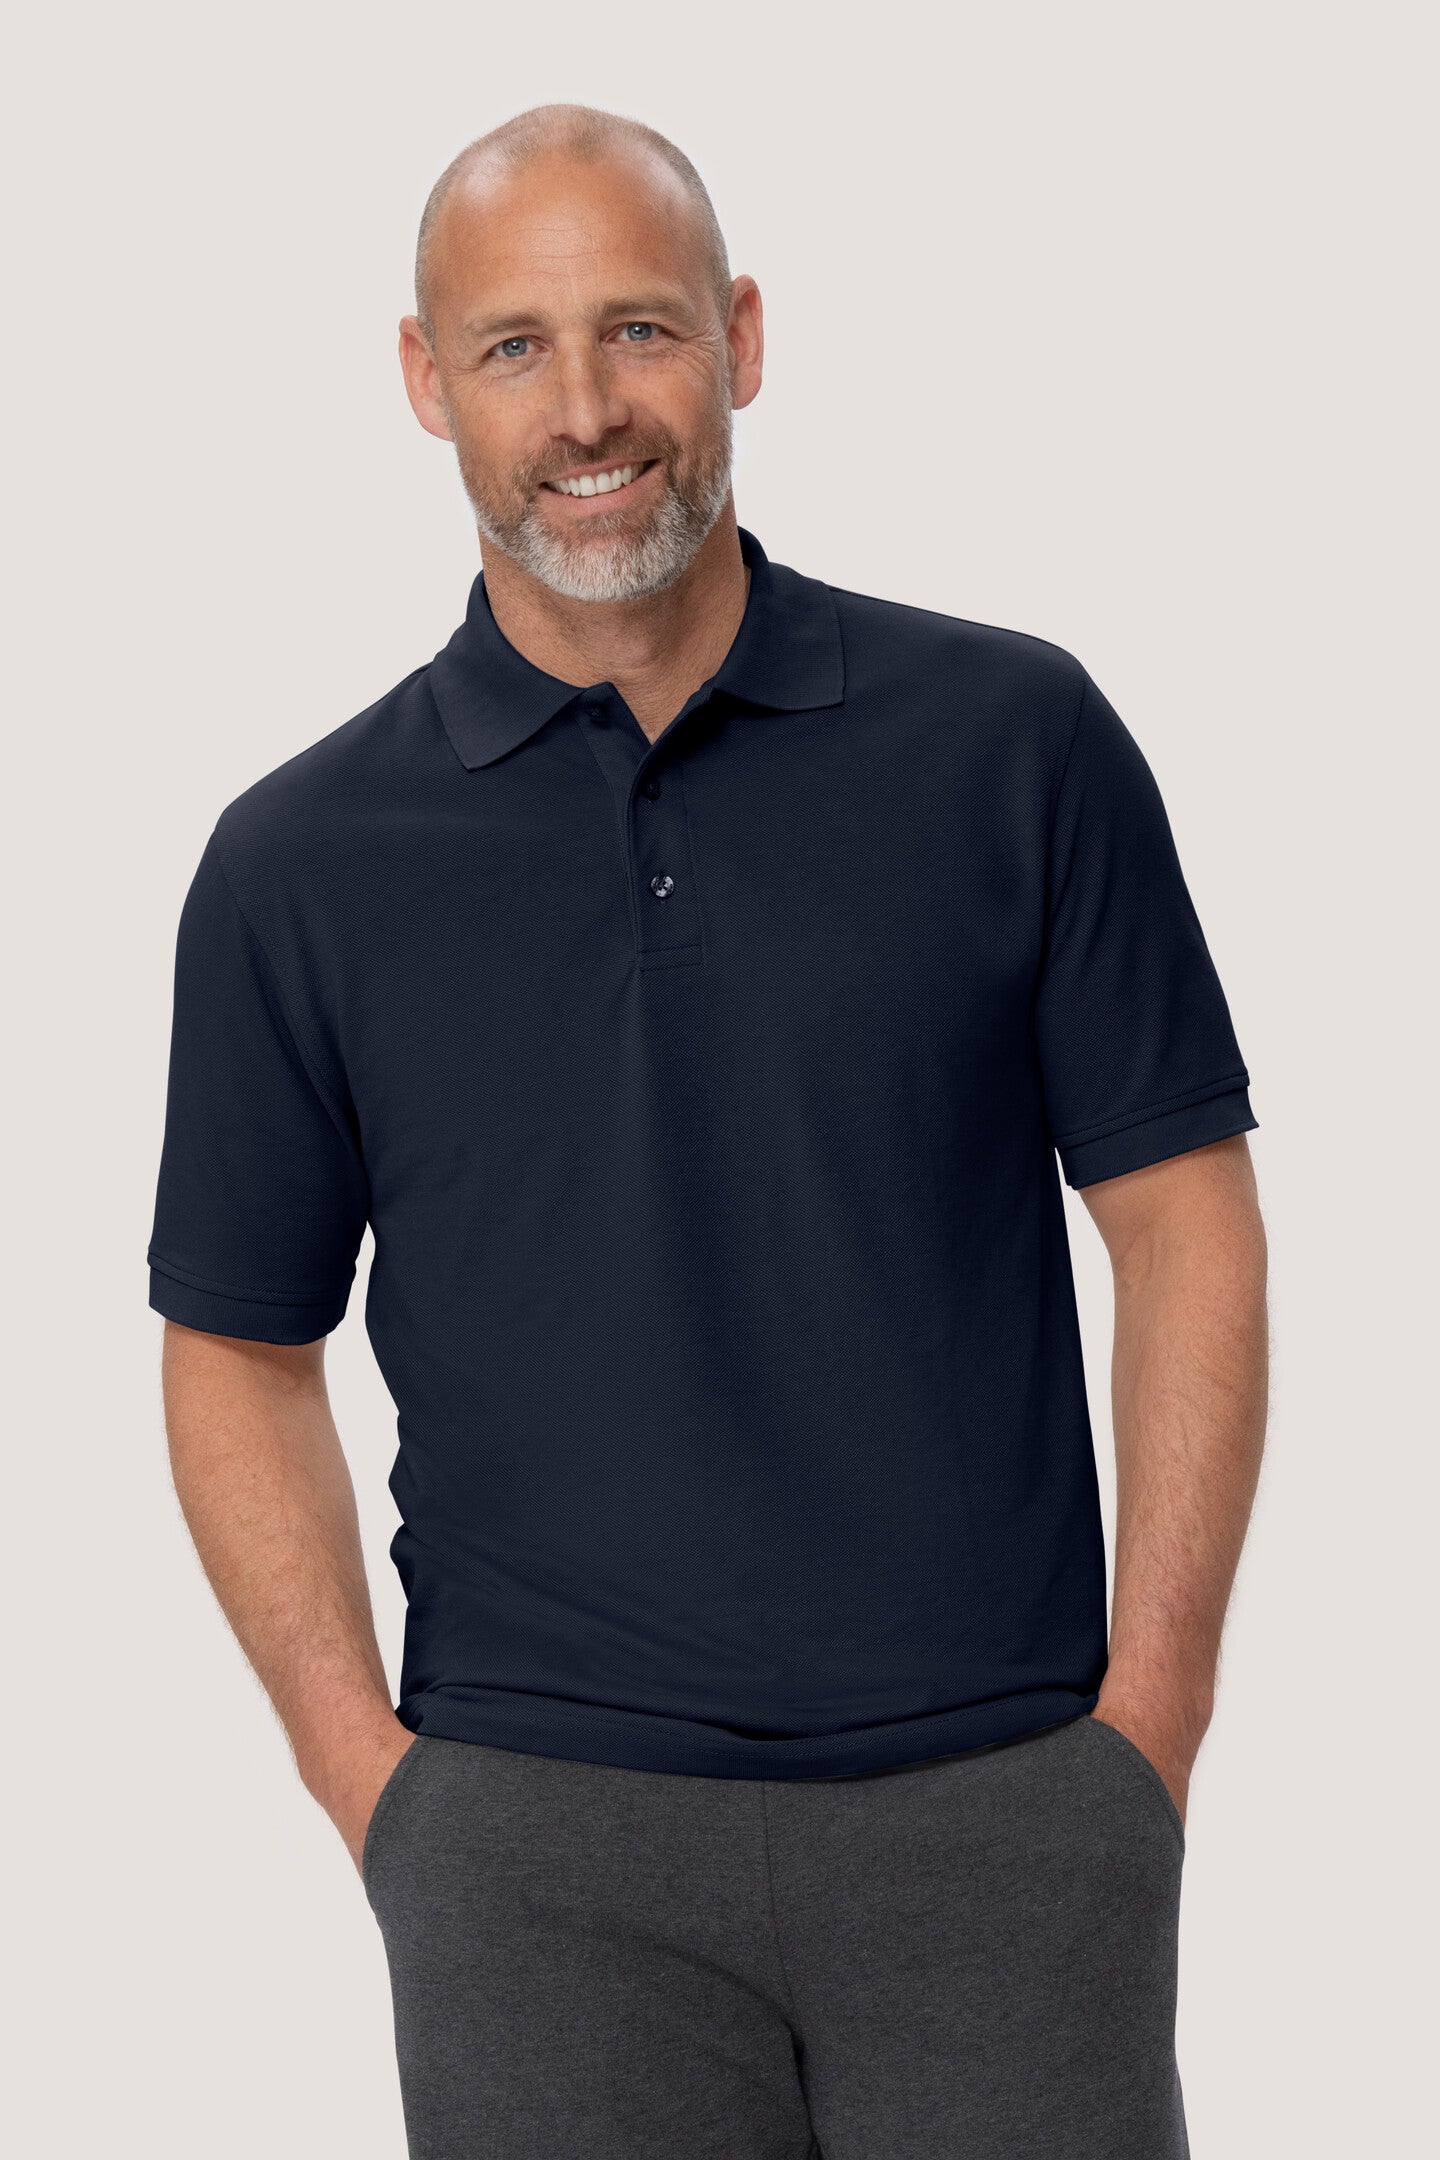 KLGym - Lehrer Polo-Shirt